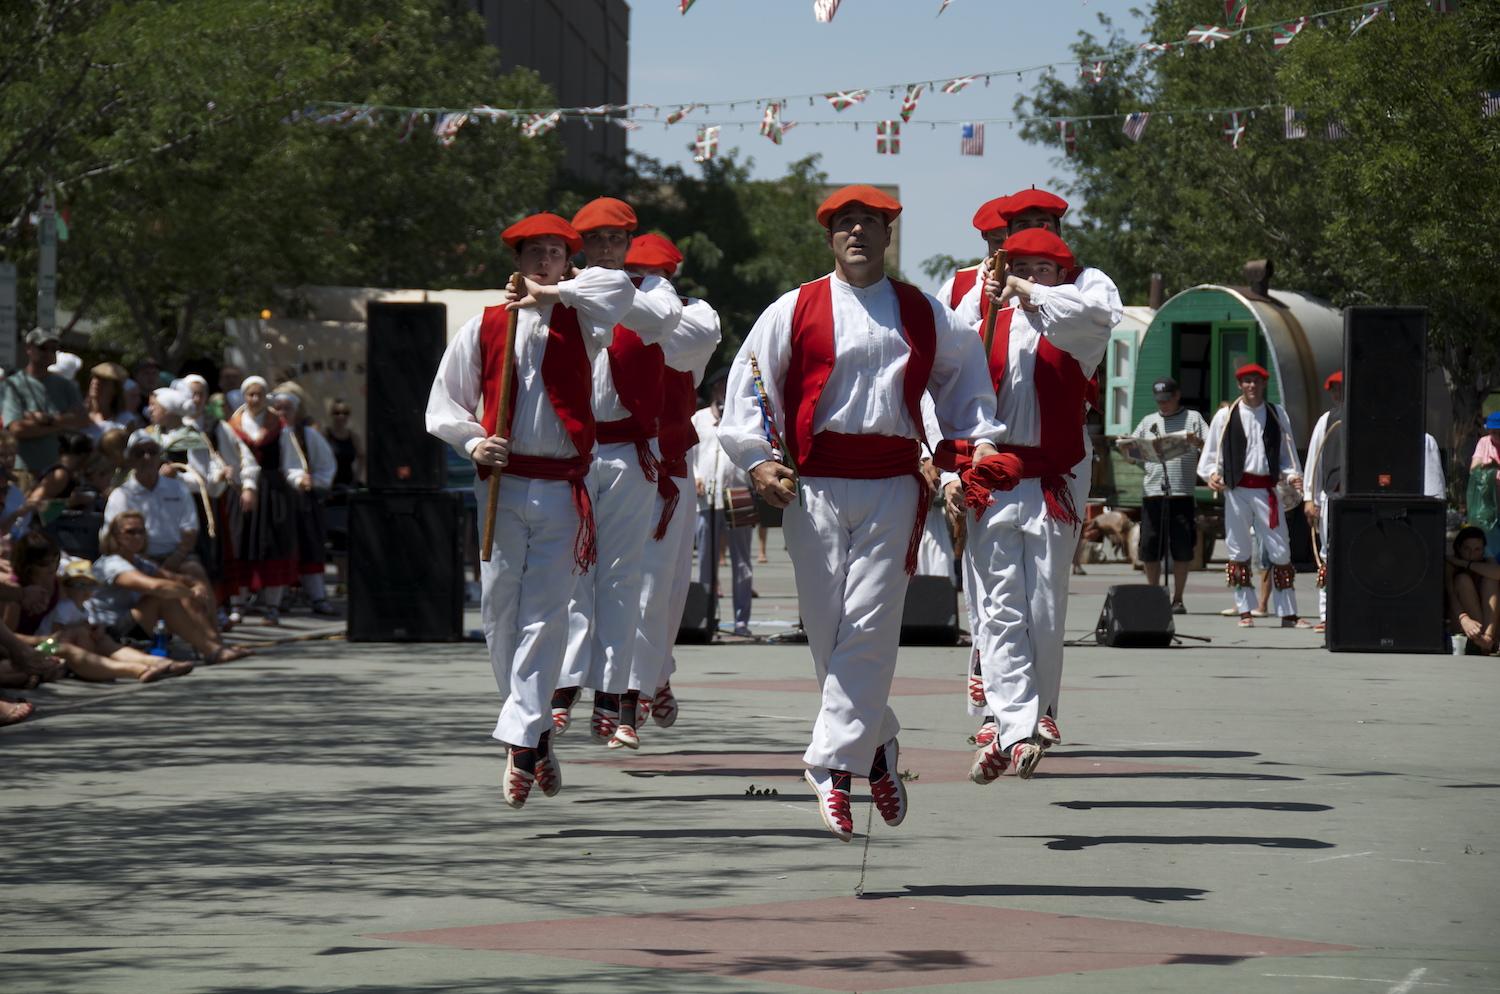 Oinkari Basque Dancers elevate the entertainment at the San Inazio Festival in Boise.